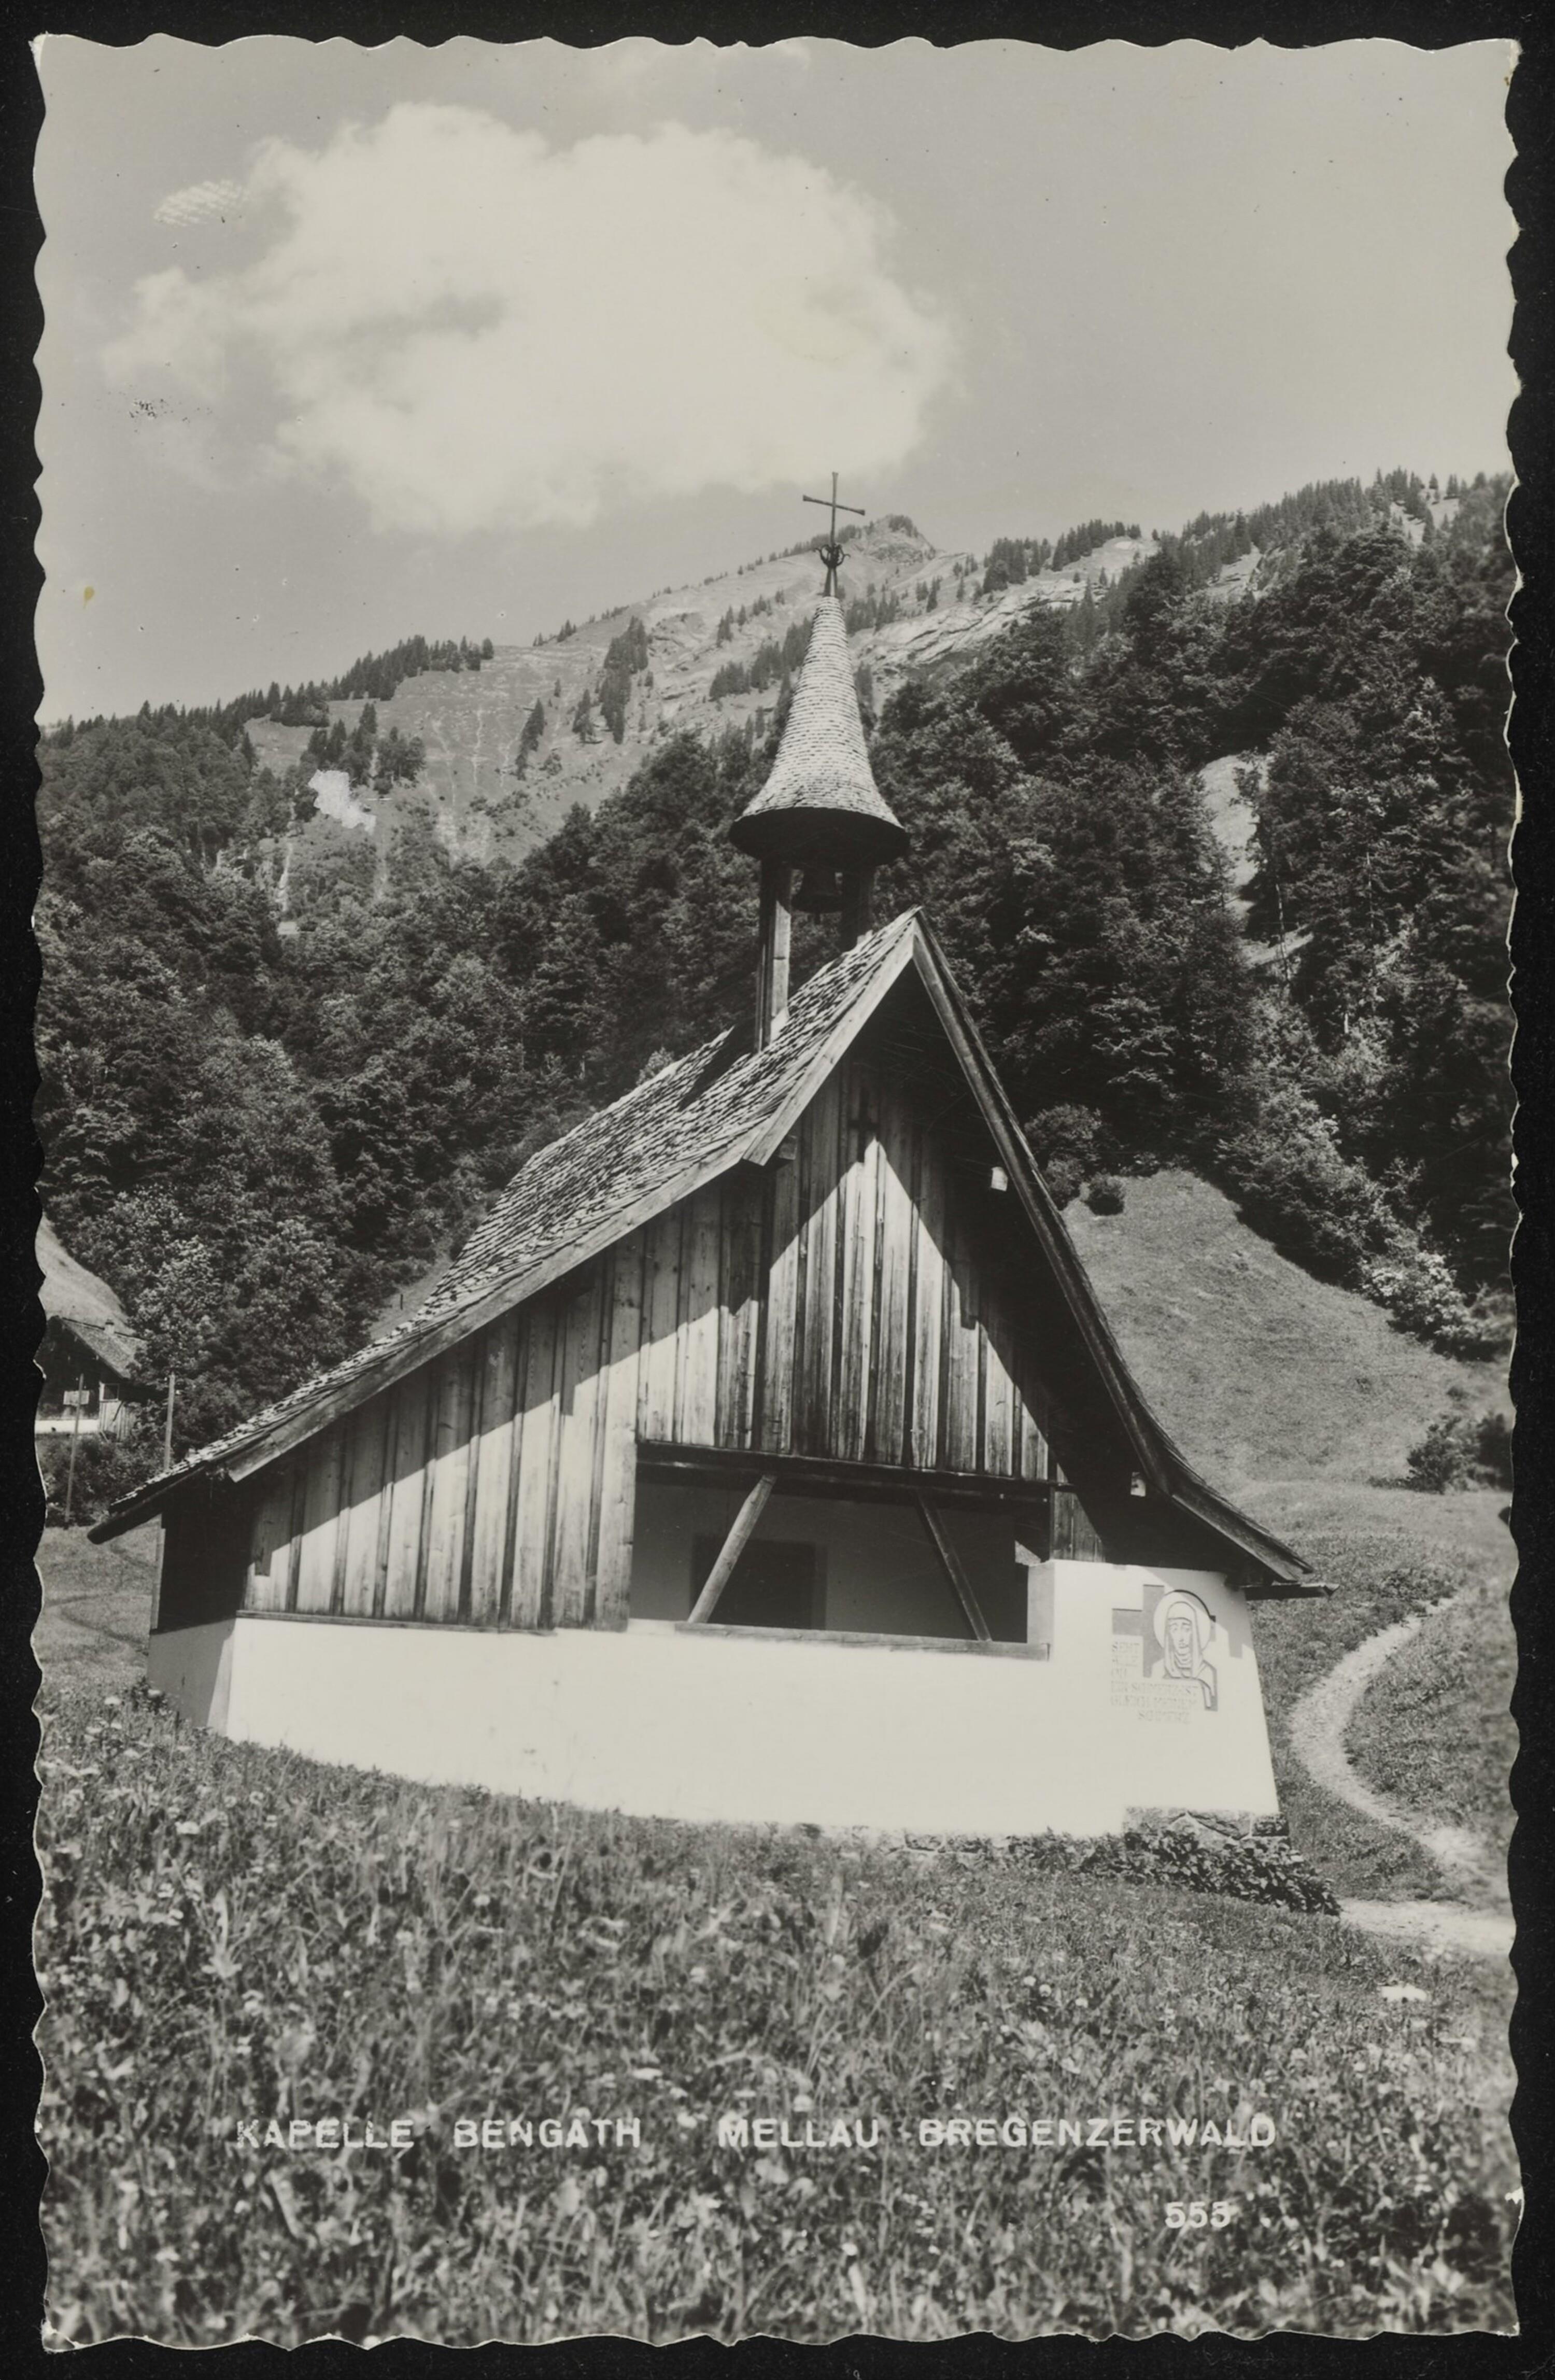 Kapelle Bengath Mellau Bregenzerwald></div>


    <hr>
    <div class=